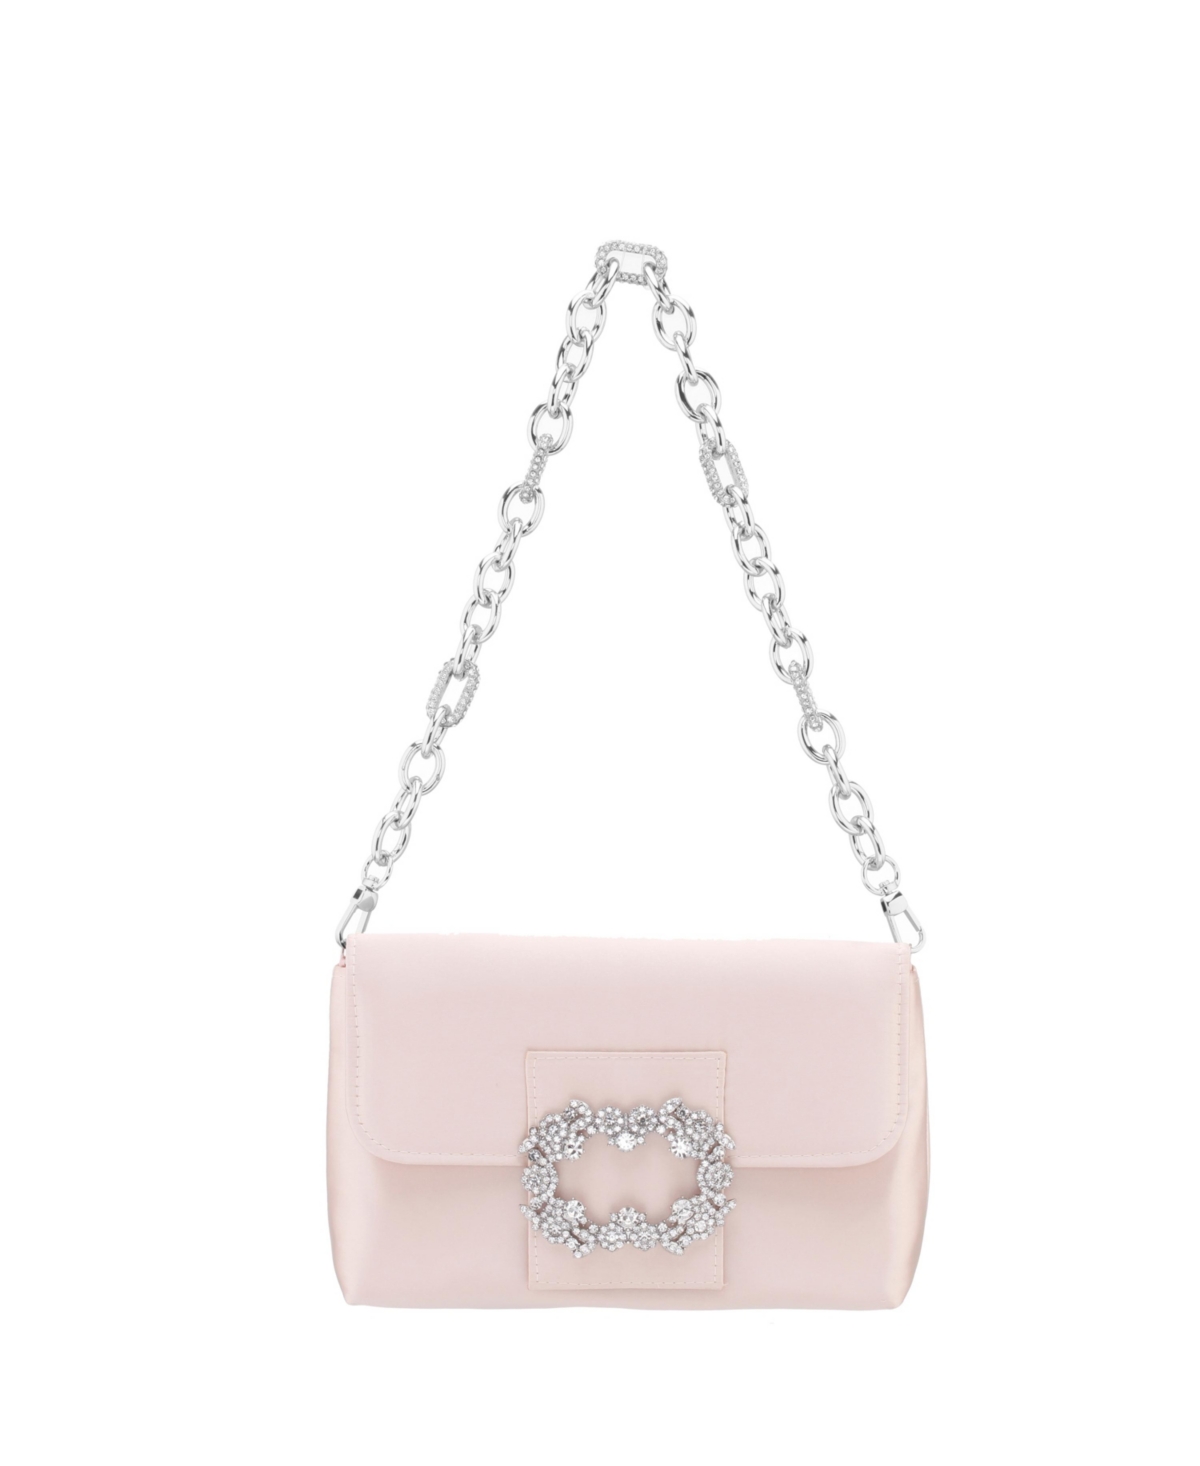 Women's Baguette Bag with Crystal Buckle Handbag - Pearl Rose